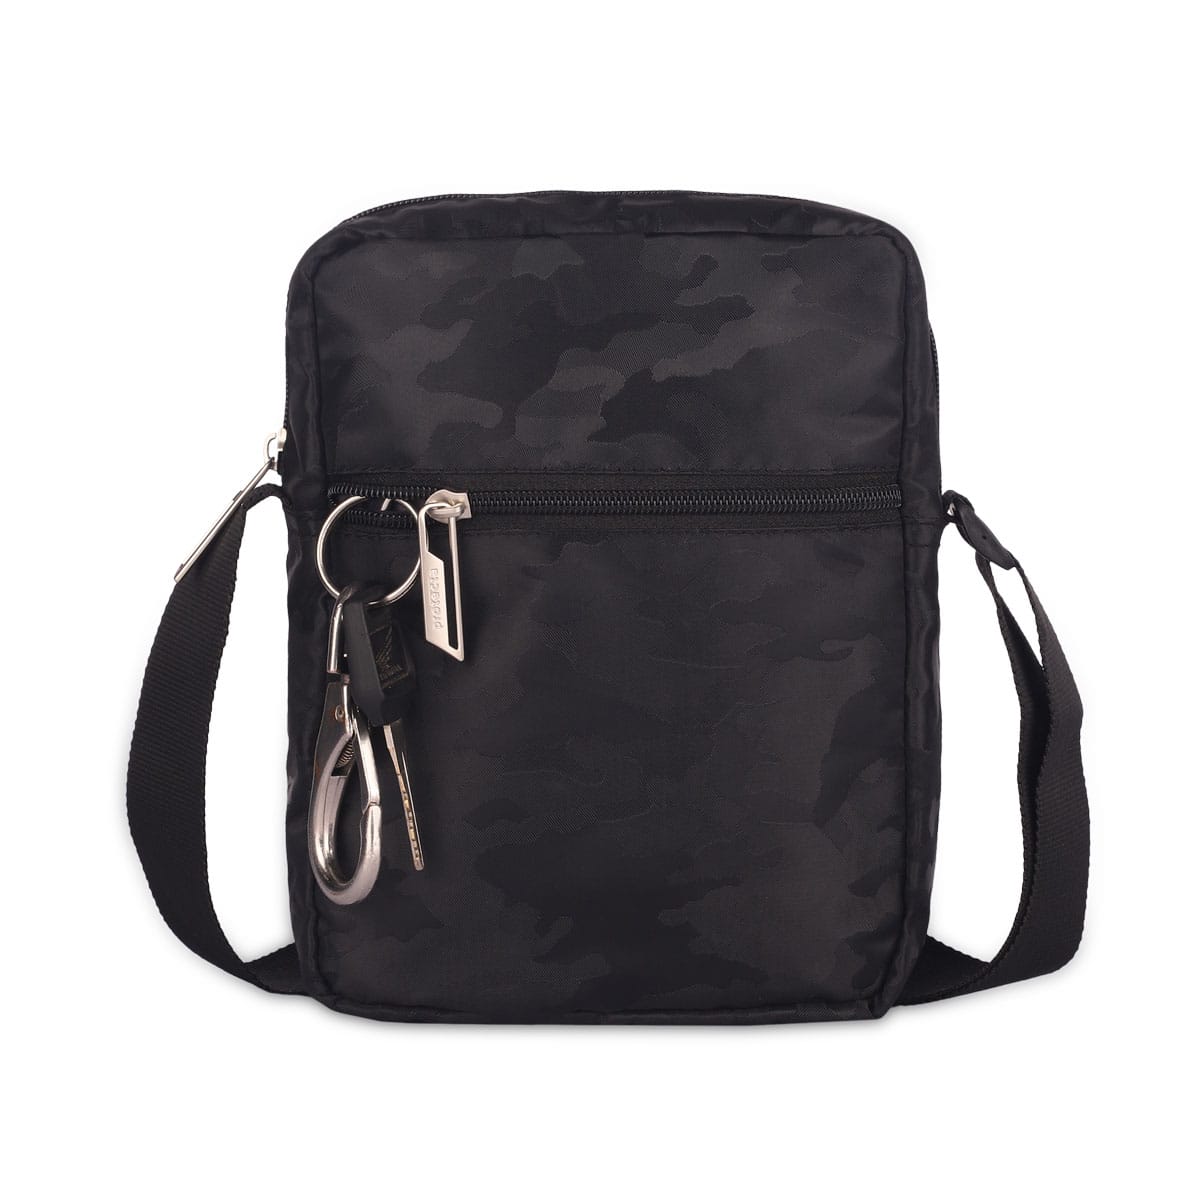 Black| Protecta Camo Unisex Sling Bag-Main